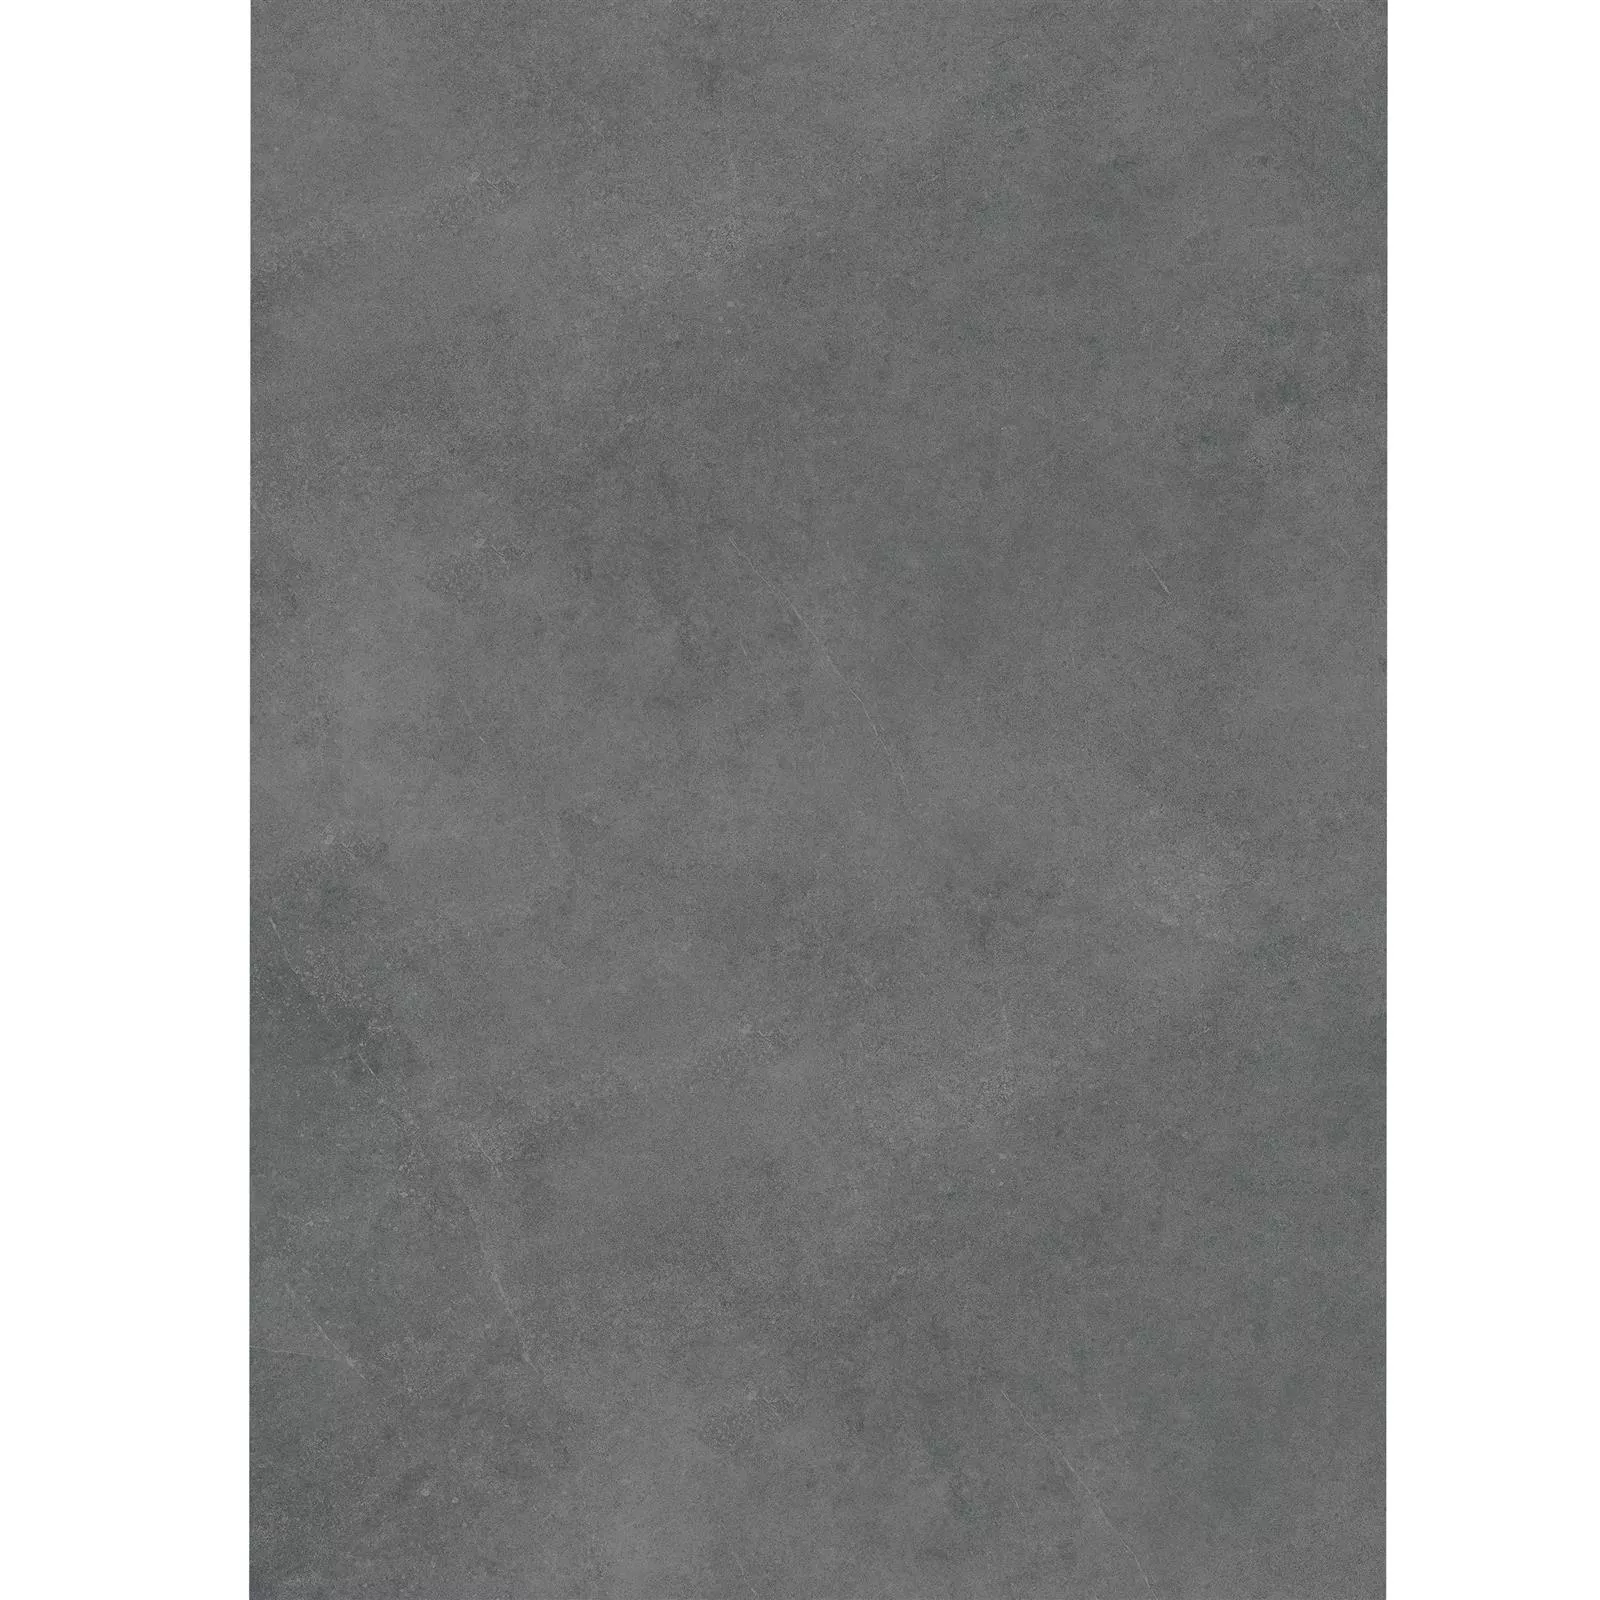 Taras Płyta Cement Optyka Glinde Antracyt 60x120cm